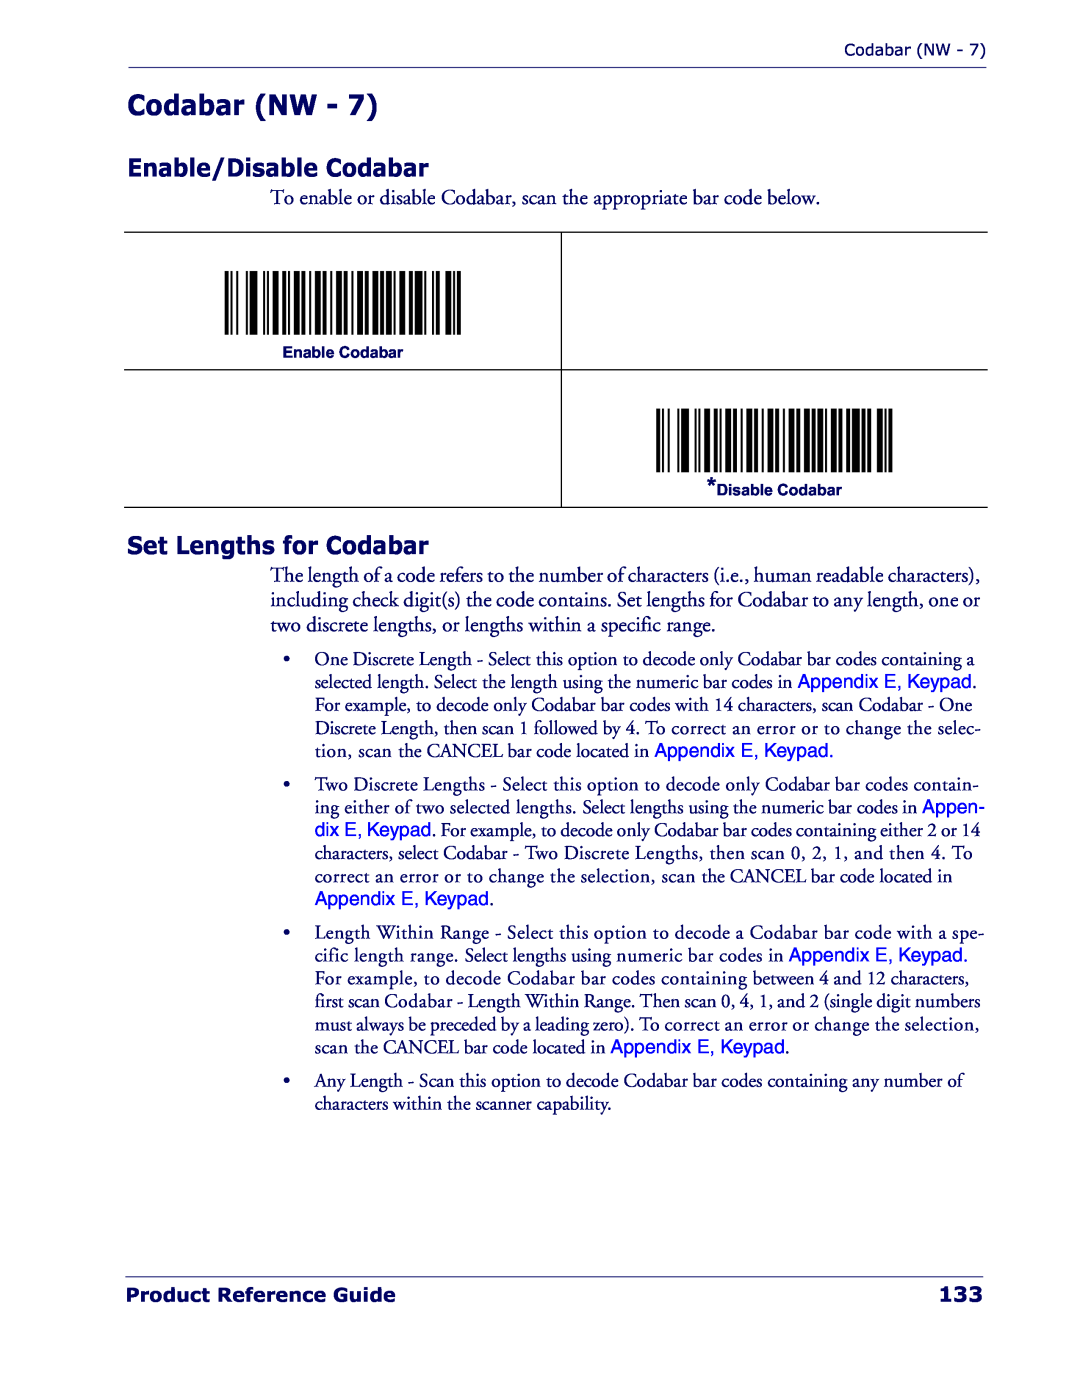 Datalogic Scanning QD 2300 manual Codabar NW, Enable/Disable Codabar, Set Lengths for Codabar, Appendix E, Keypad 